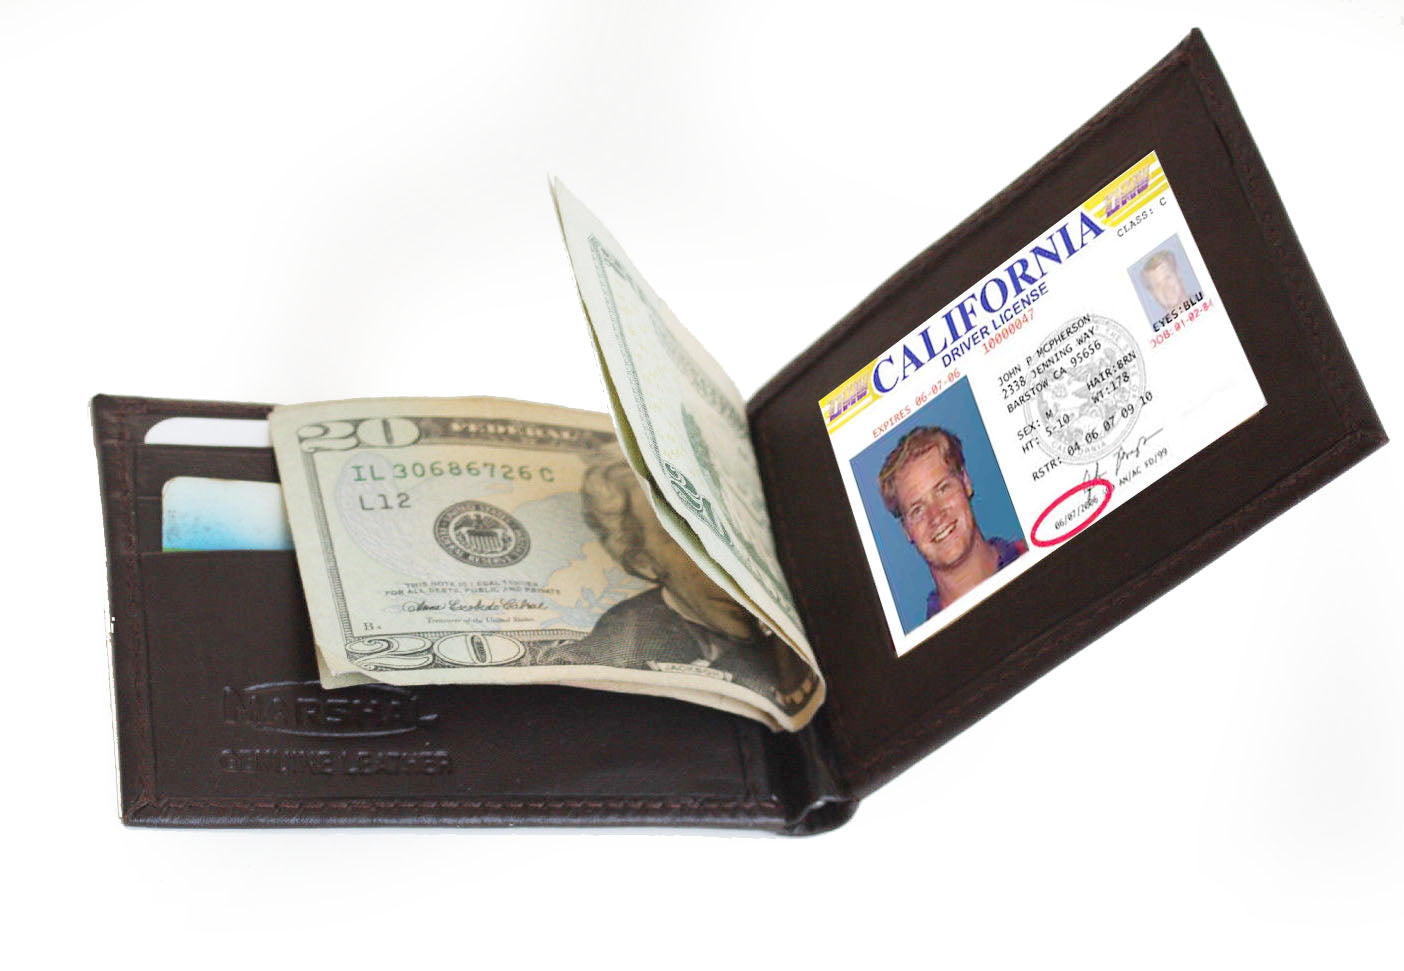 RFID Blocking Leather Men's Bifold Money Clip Wallet ID Credit Card Holder